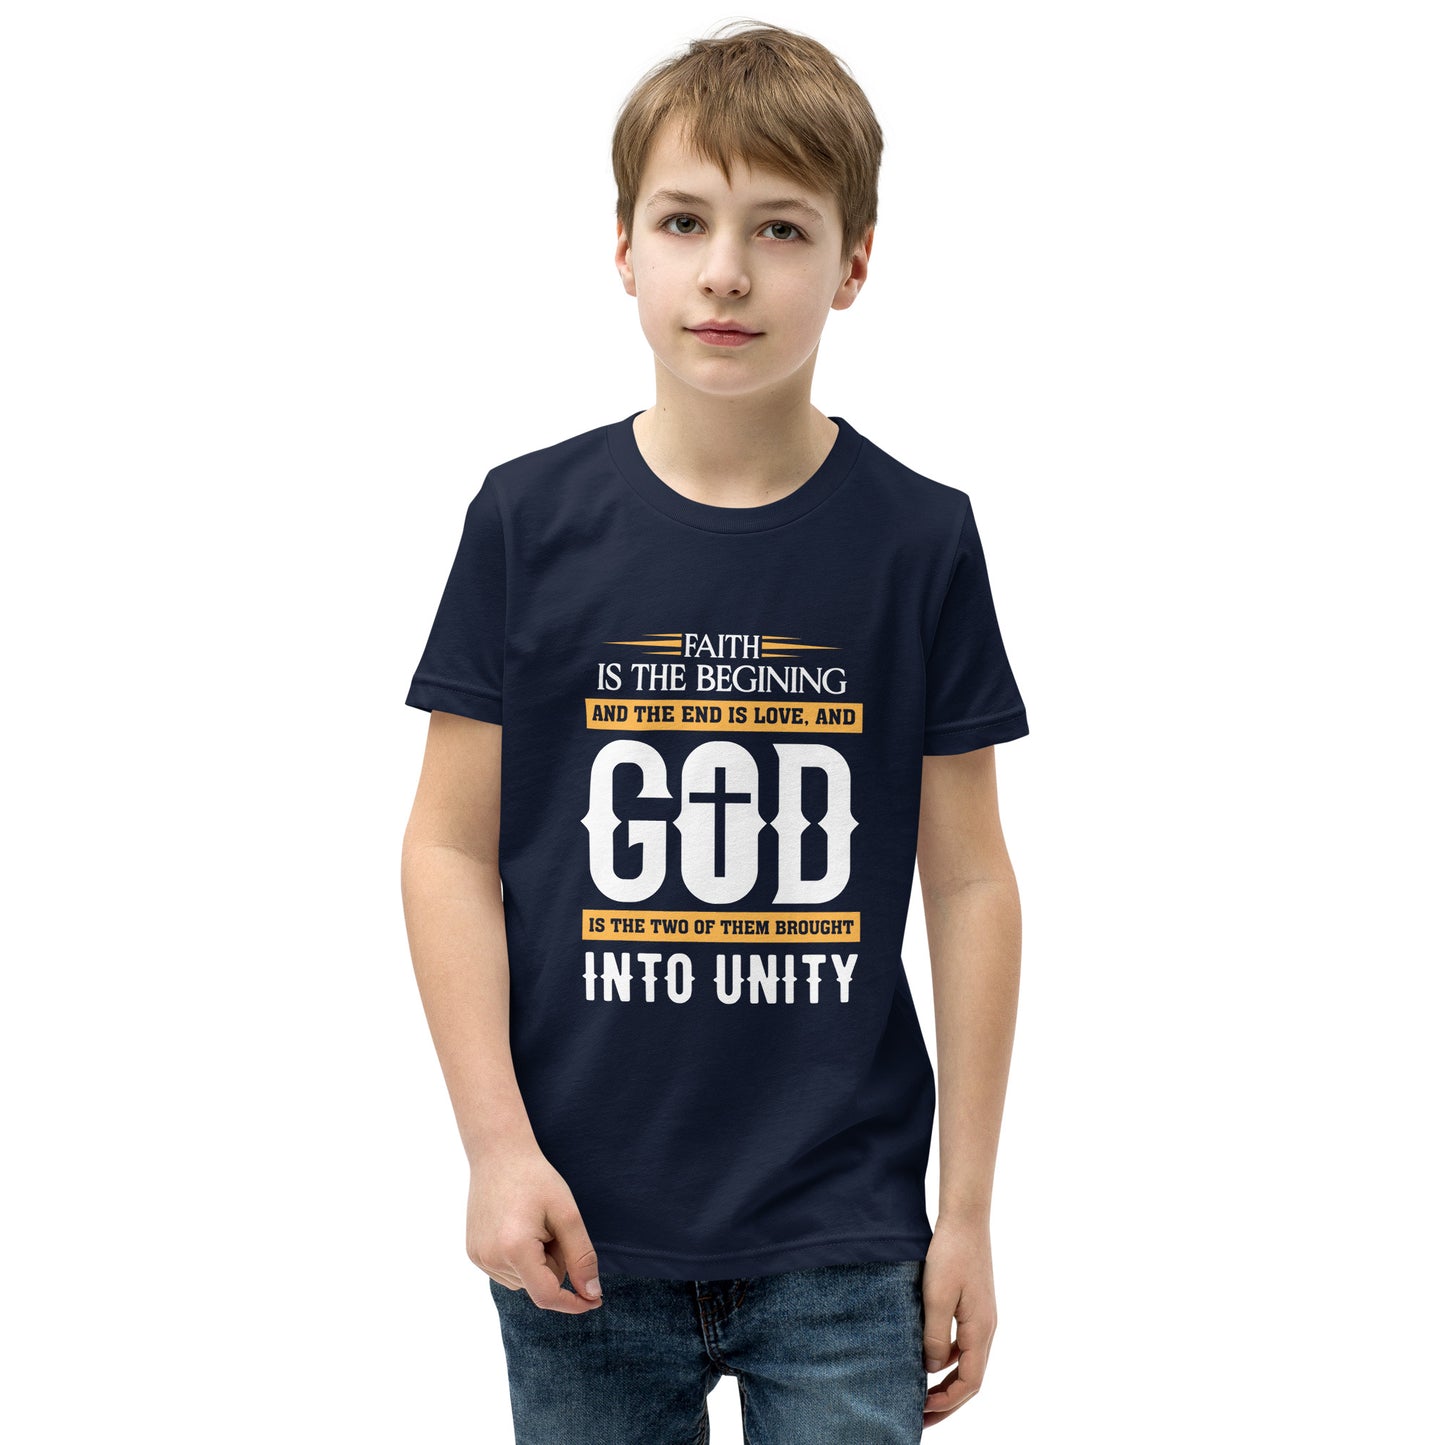 Faith and Love Children's Christian t-Shirt